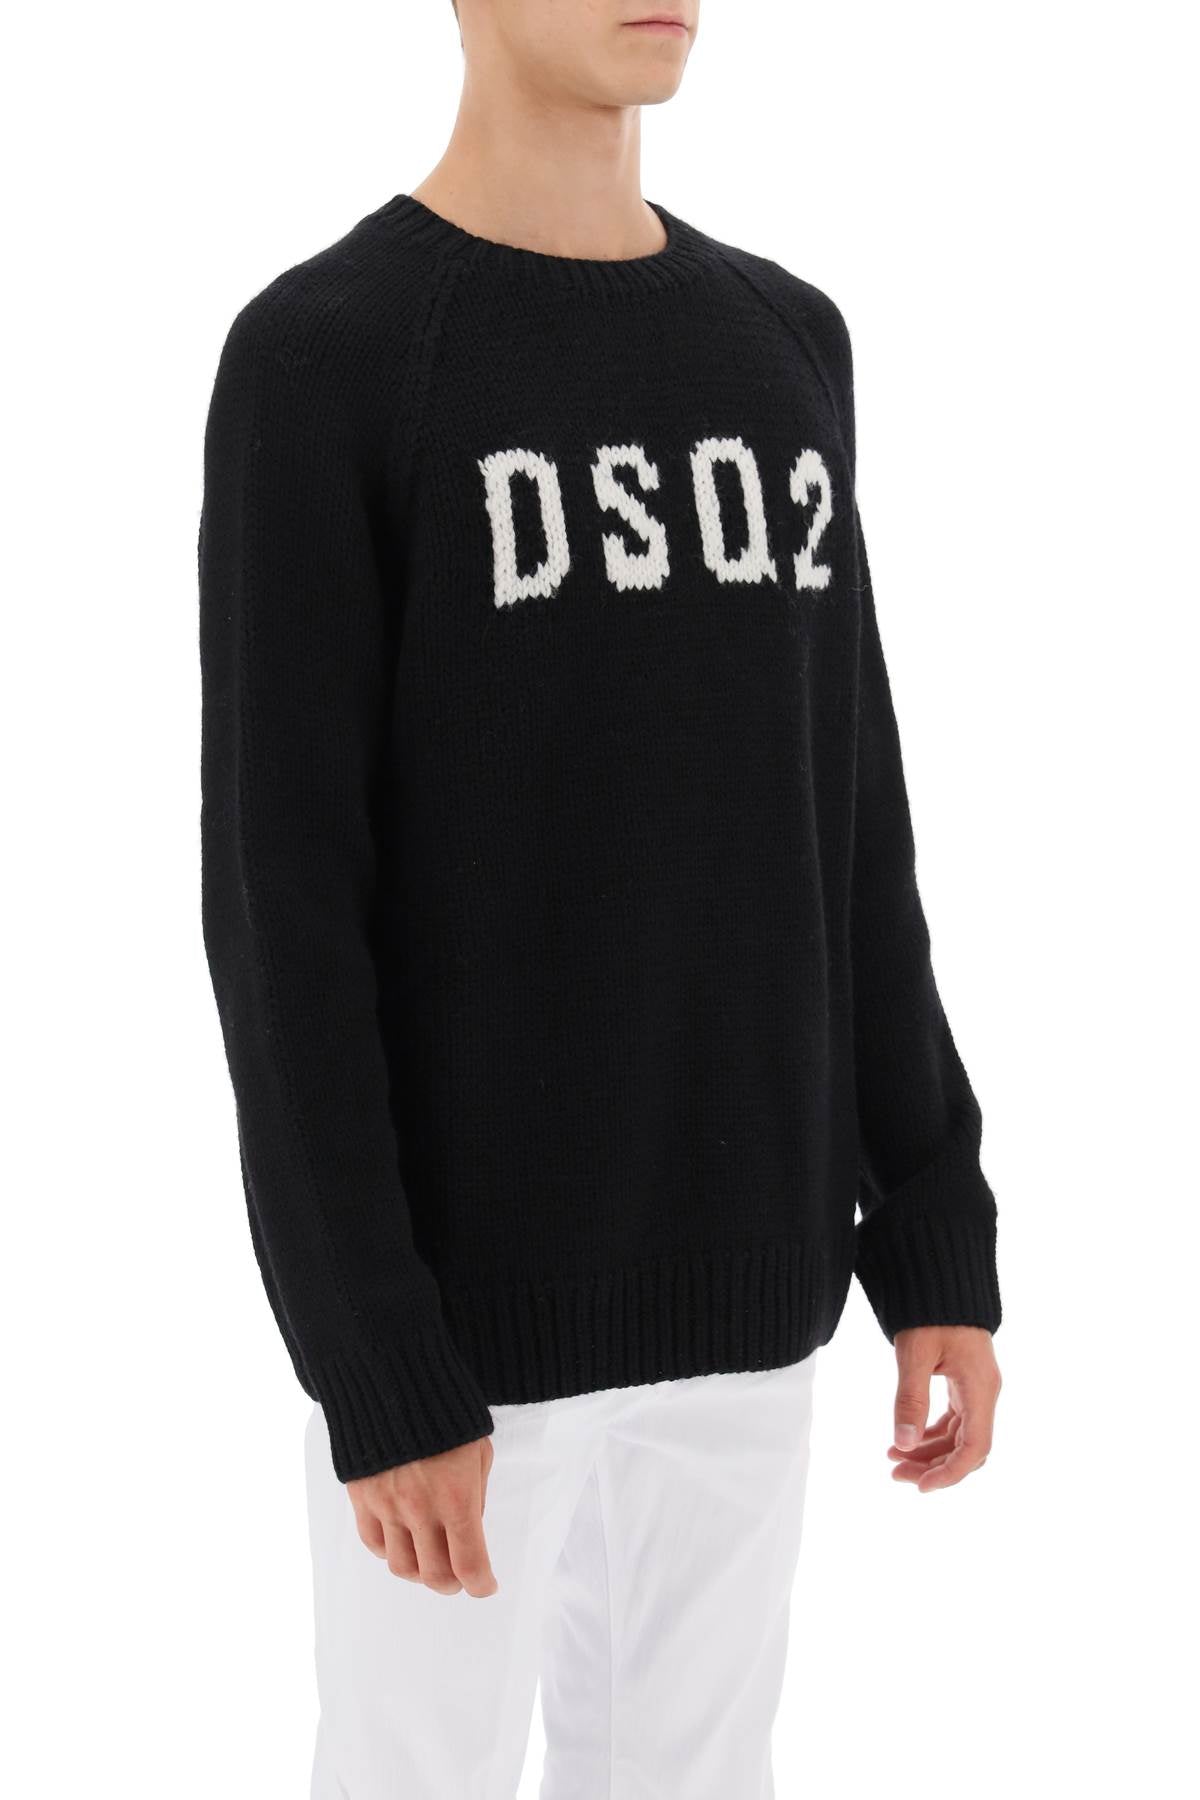 Dsquared2 dsq2 wool sweater-1